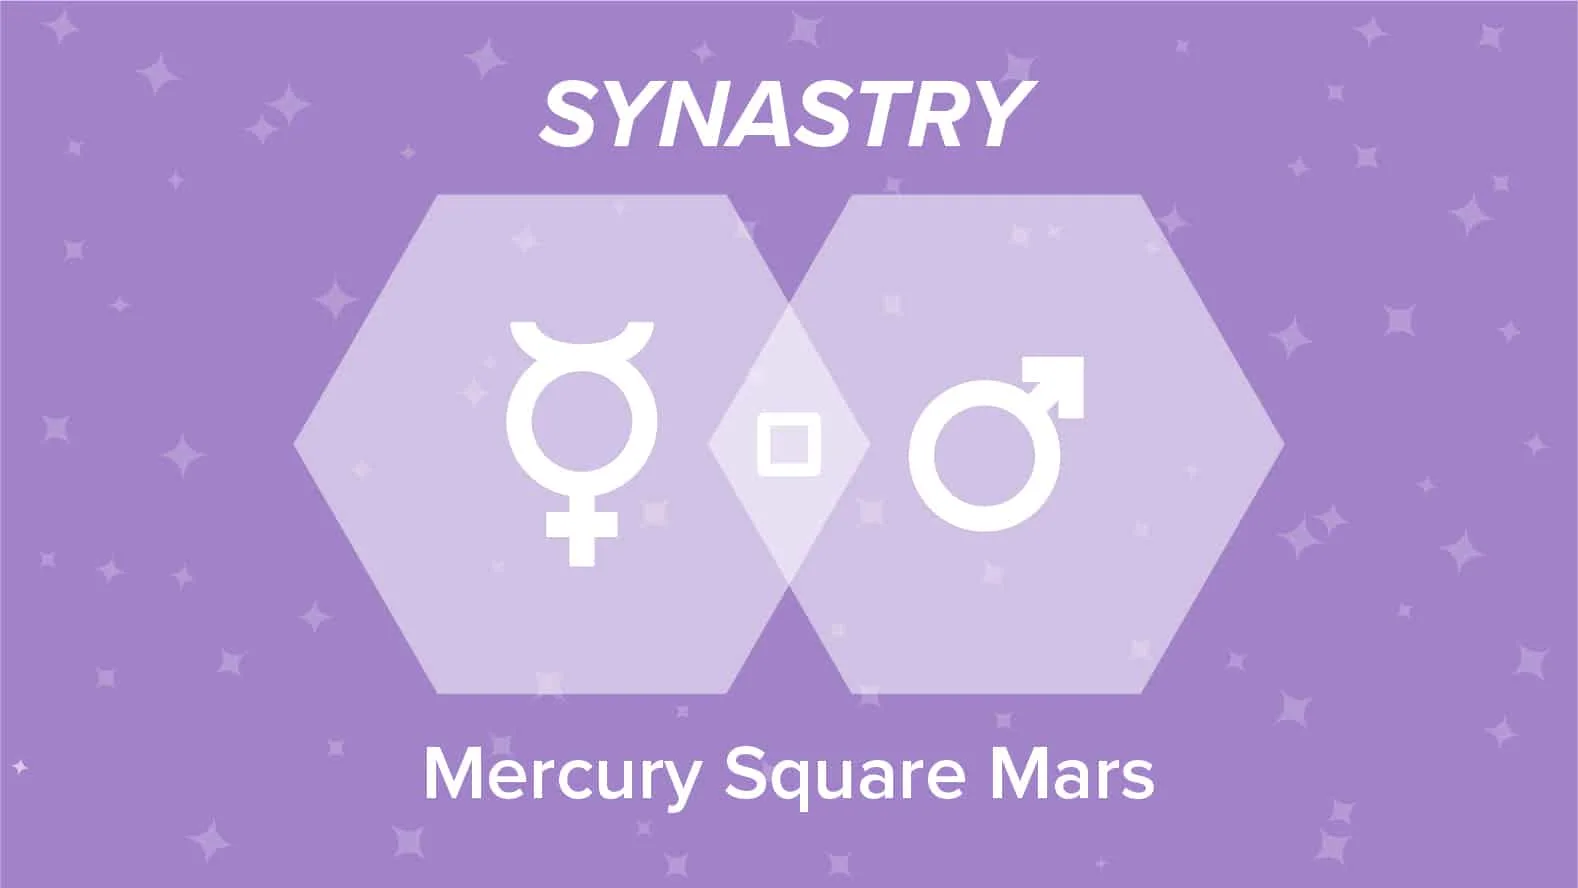 Mercury Square Mars Synastry